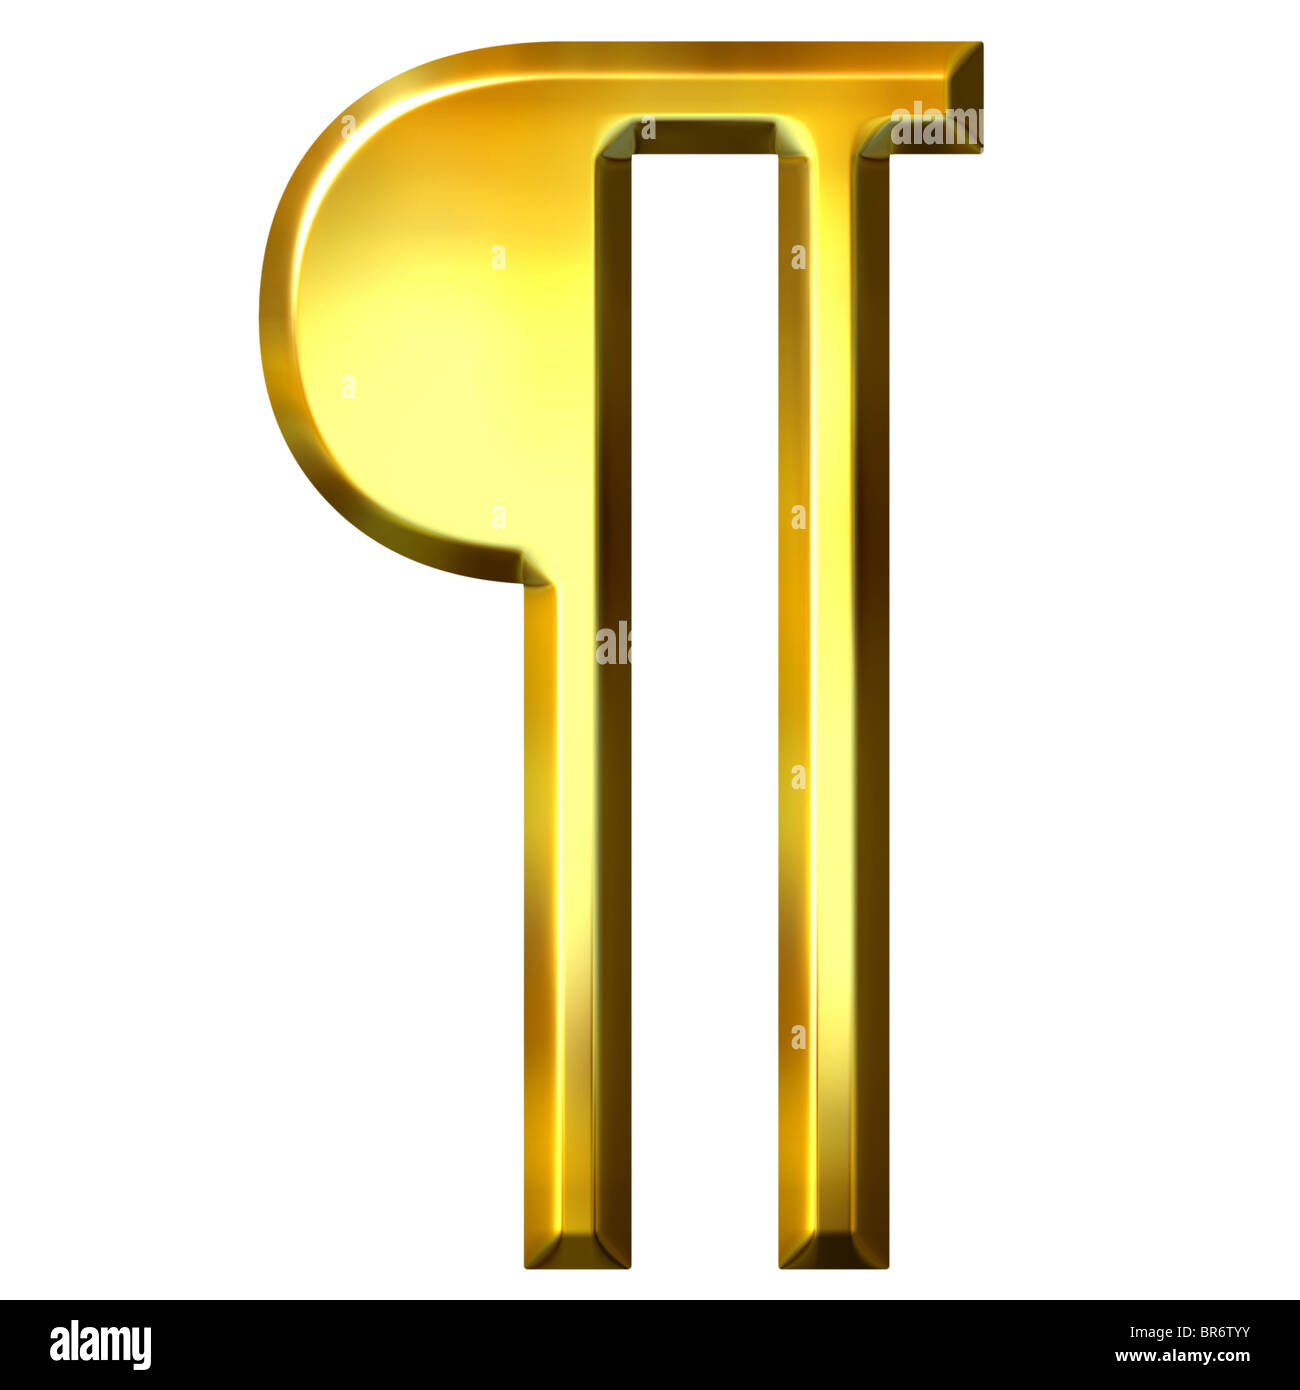 3D golden Pilcrow Absatzsymbol Stockfoto